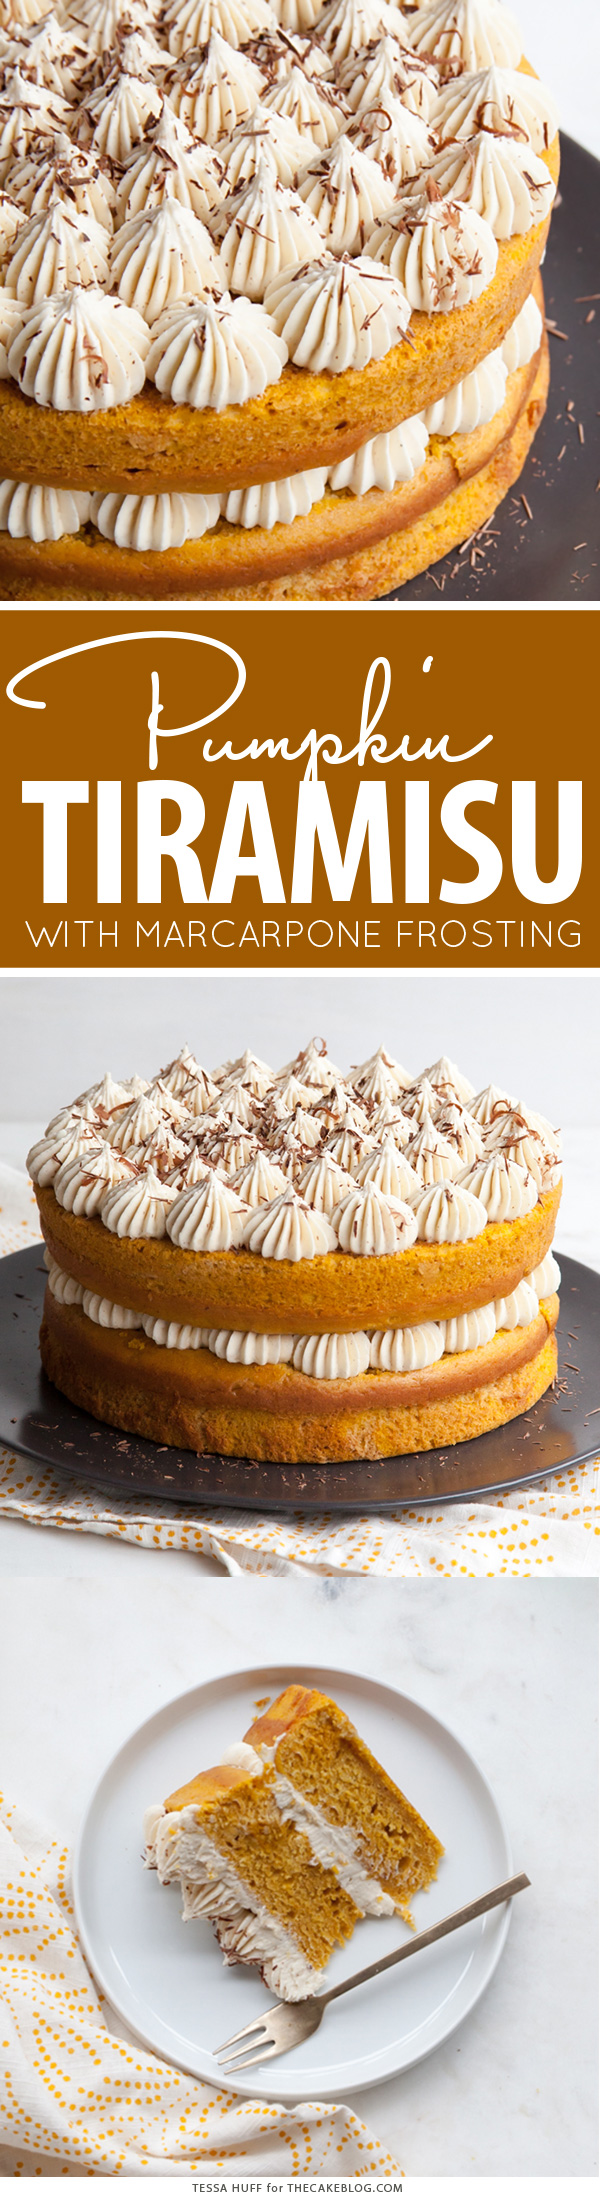 Pumpkin Tiramisu Cake - pumpkin spice cake soaked with coffee-liqueur, fluffy mascarpone frosting and chocolate shavings | Tessa Huff for TheCakeBlog.com